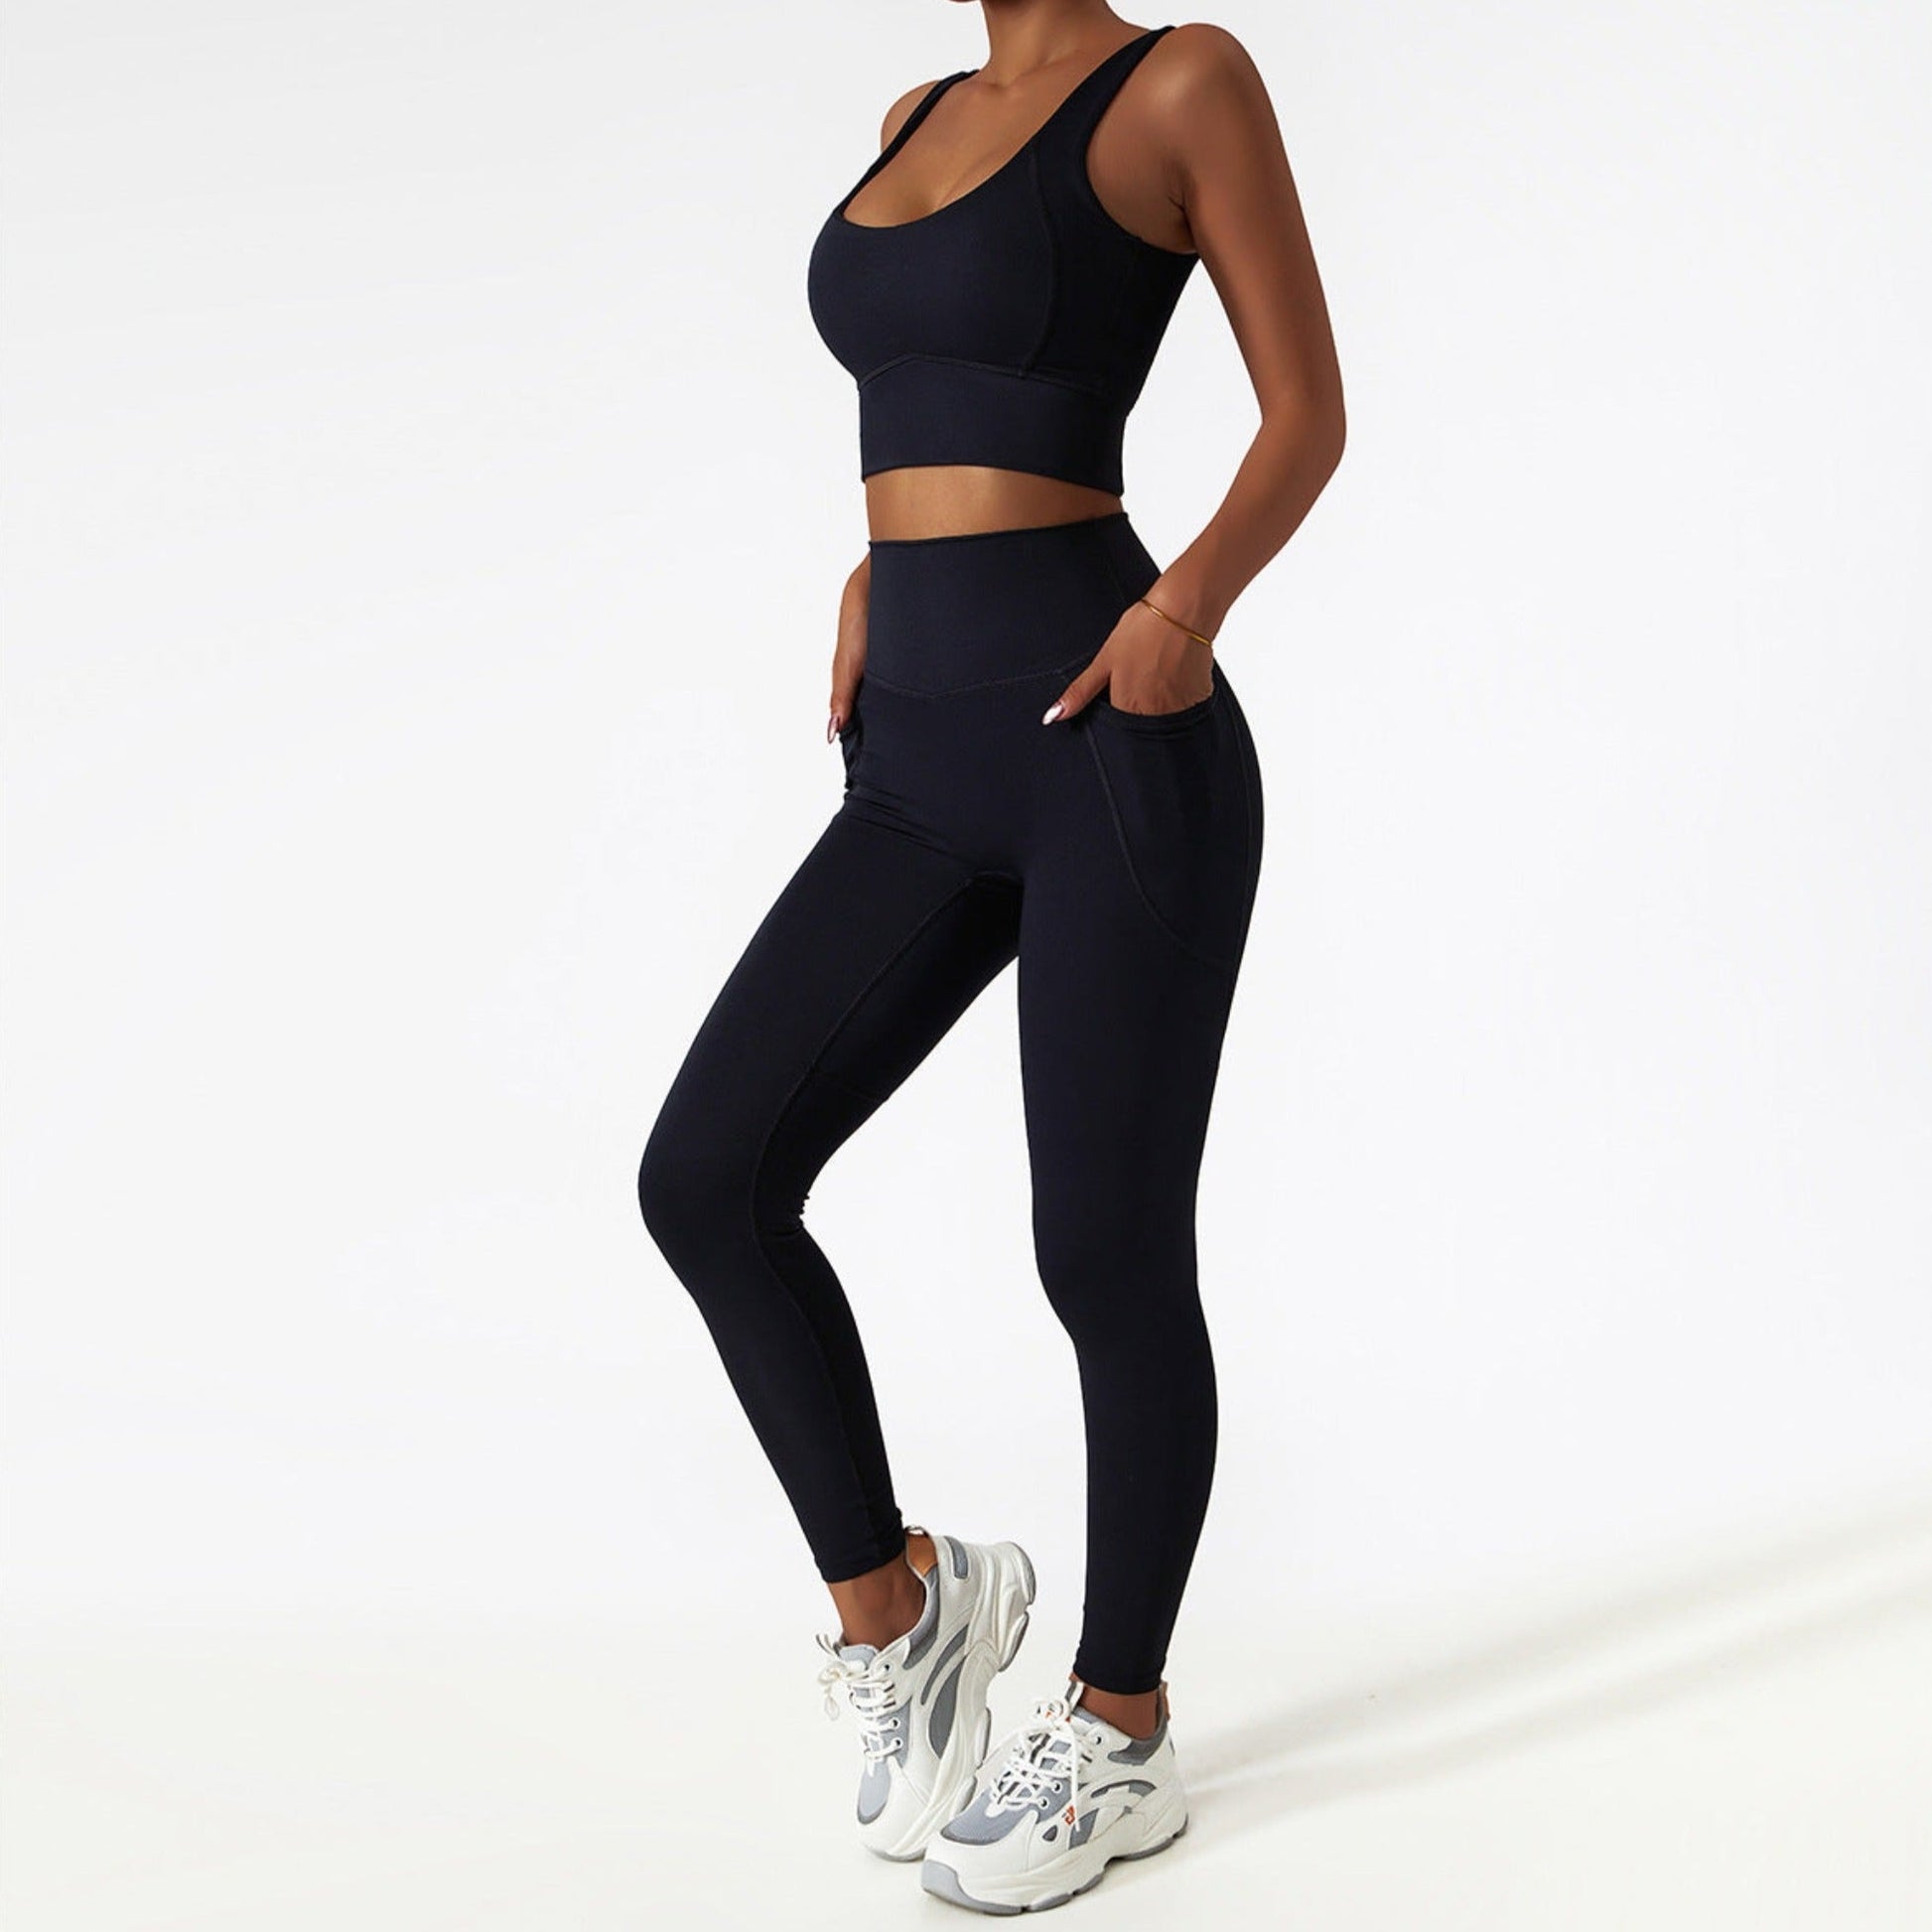 Fitness model wearing a black Chloe Set from Vibras Activewear.